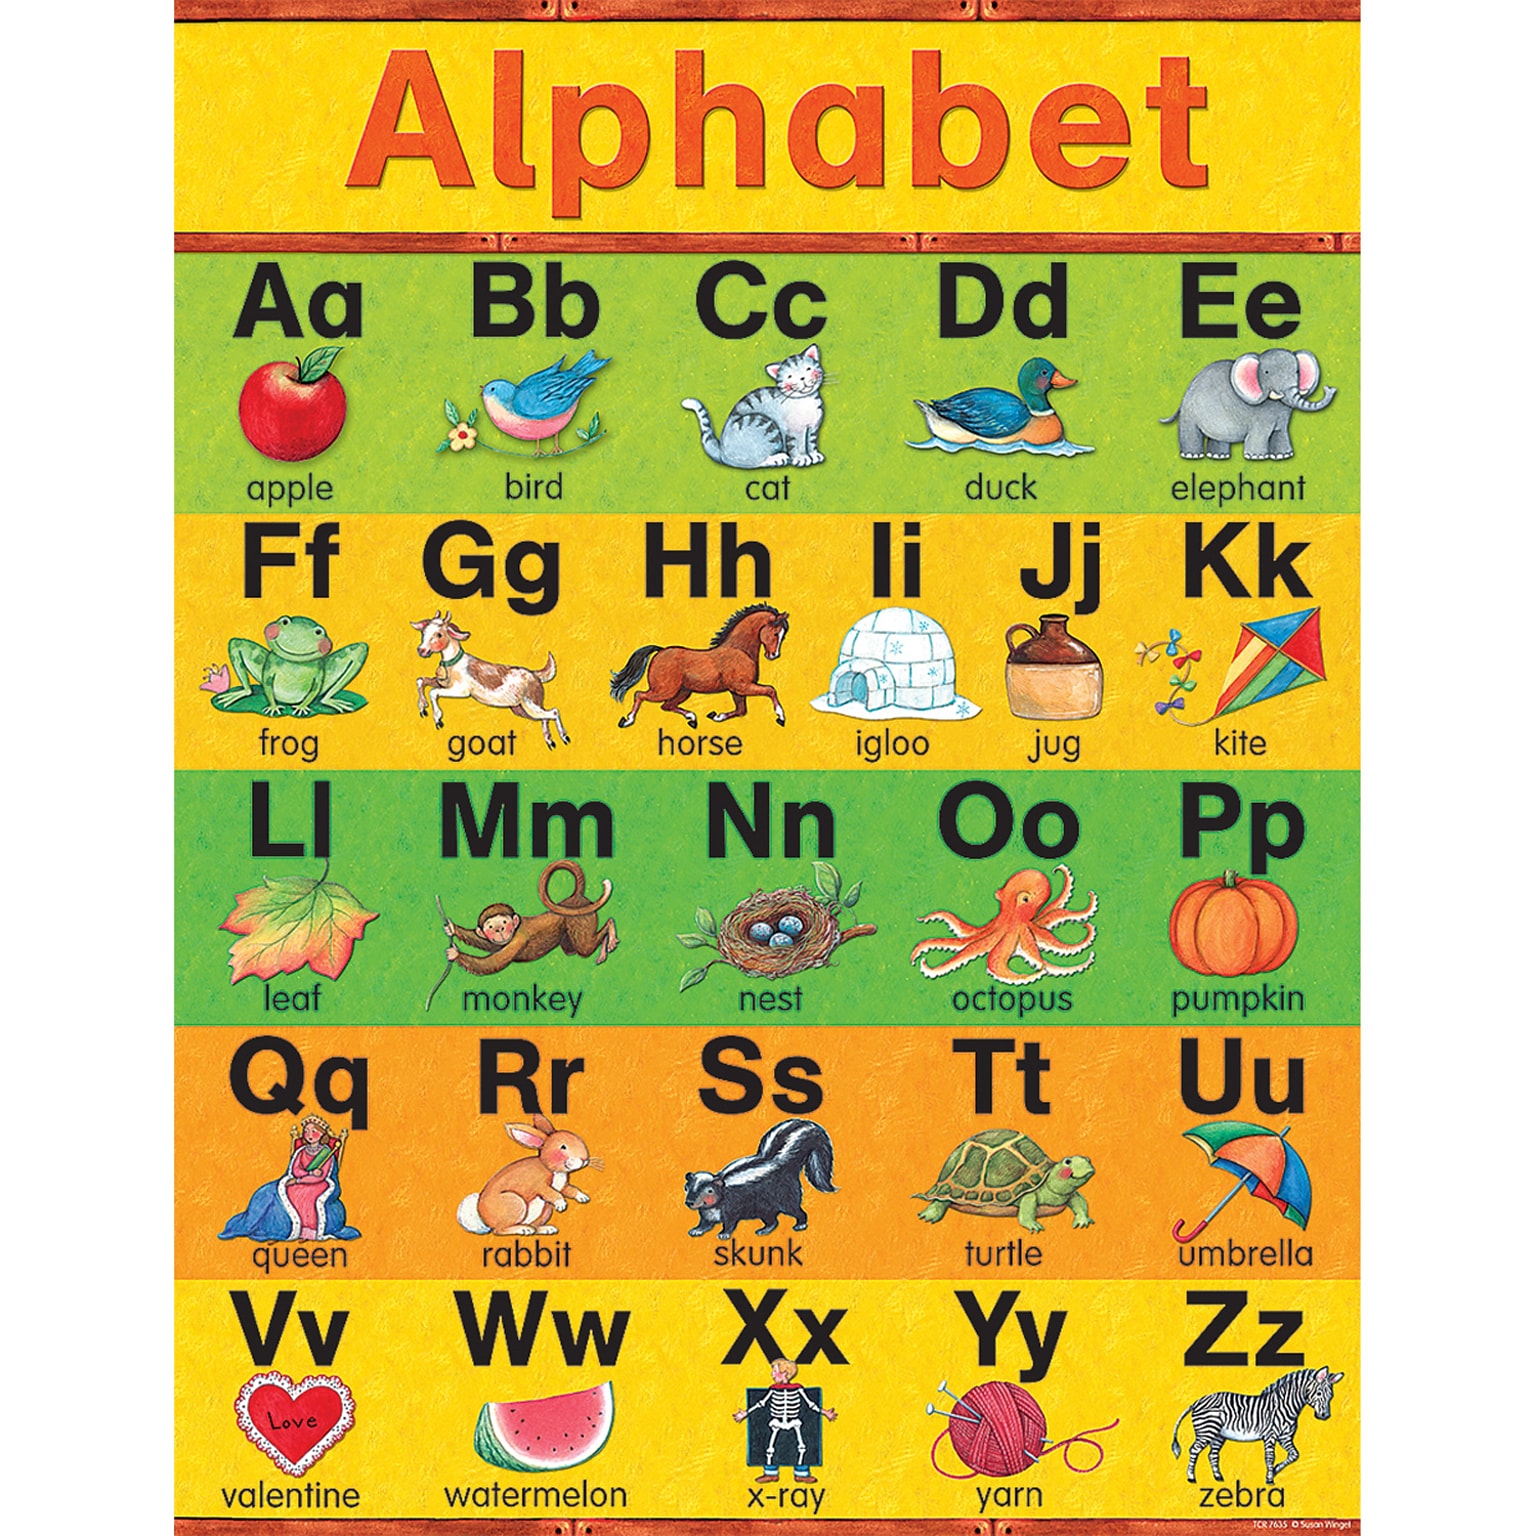 Teacher Created Resources® Alphabet Chart (TCR7635)